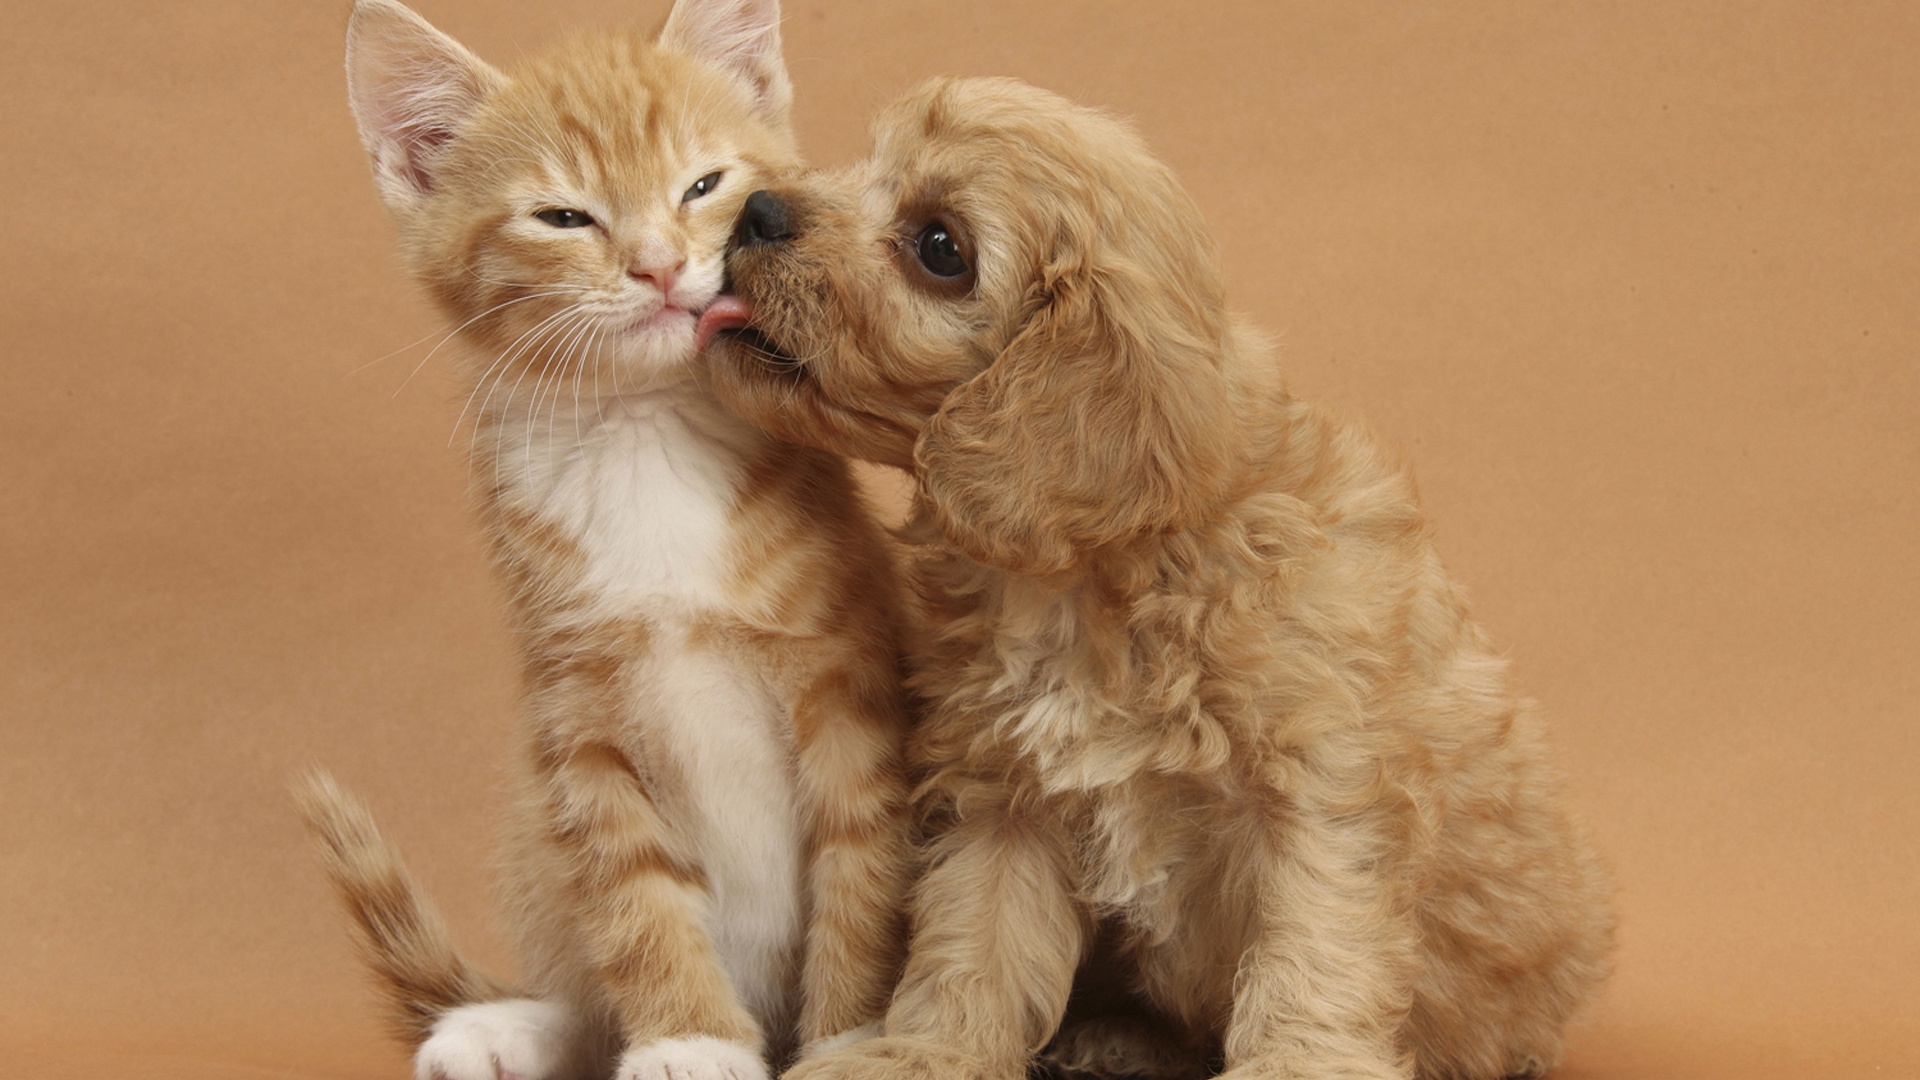 Kitten And Puppy Friendship Full HD Desktop Wallpaper 1080p